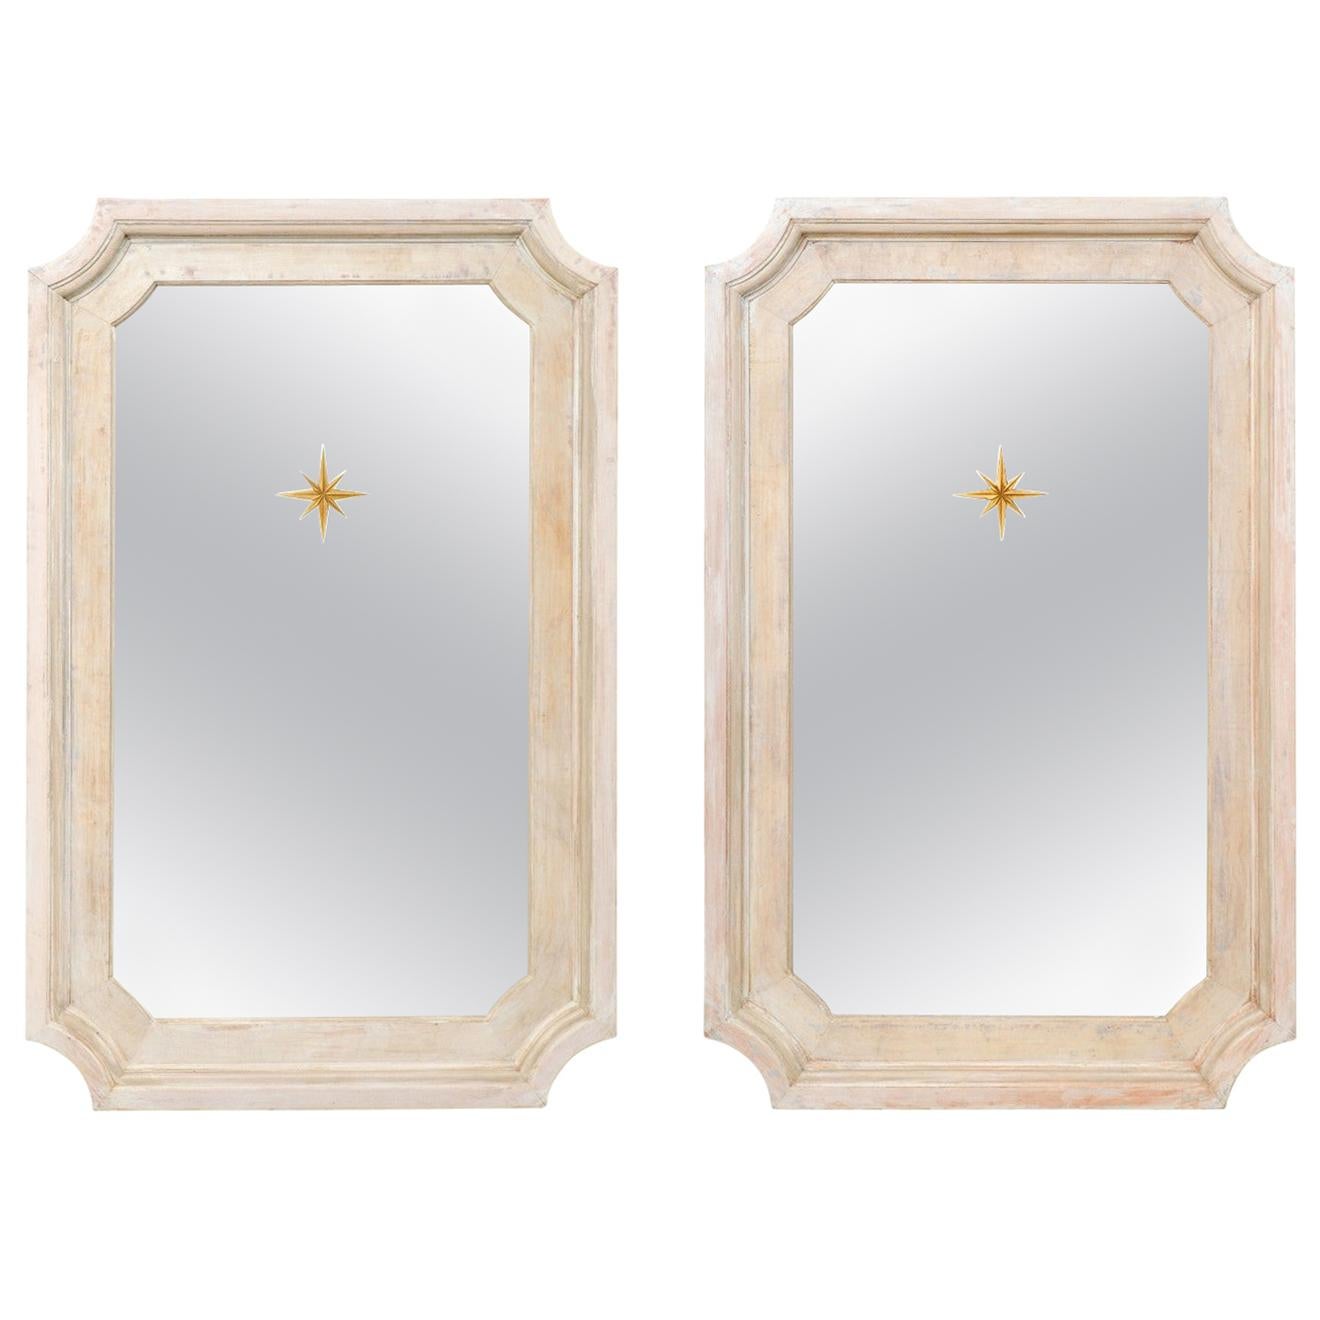 Artisan-Made Tall Wood Mirrors with Verre Églomisé Sunburst Center Accent, Pair